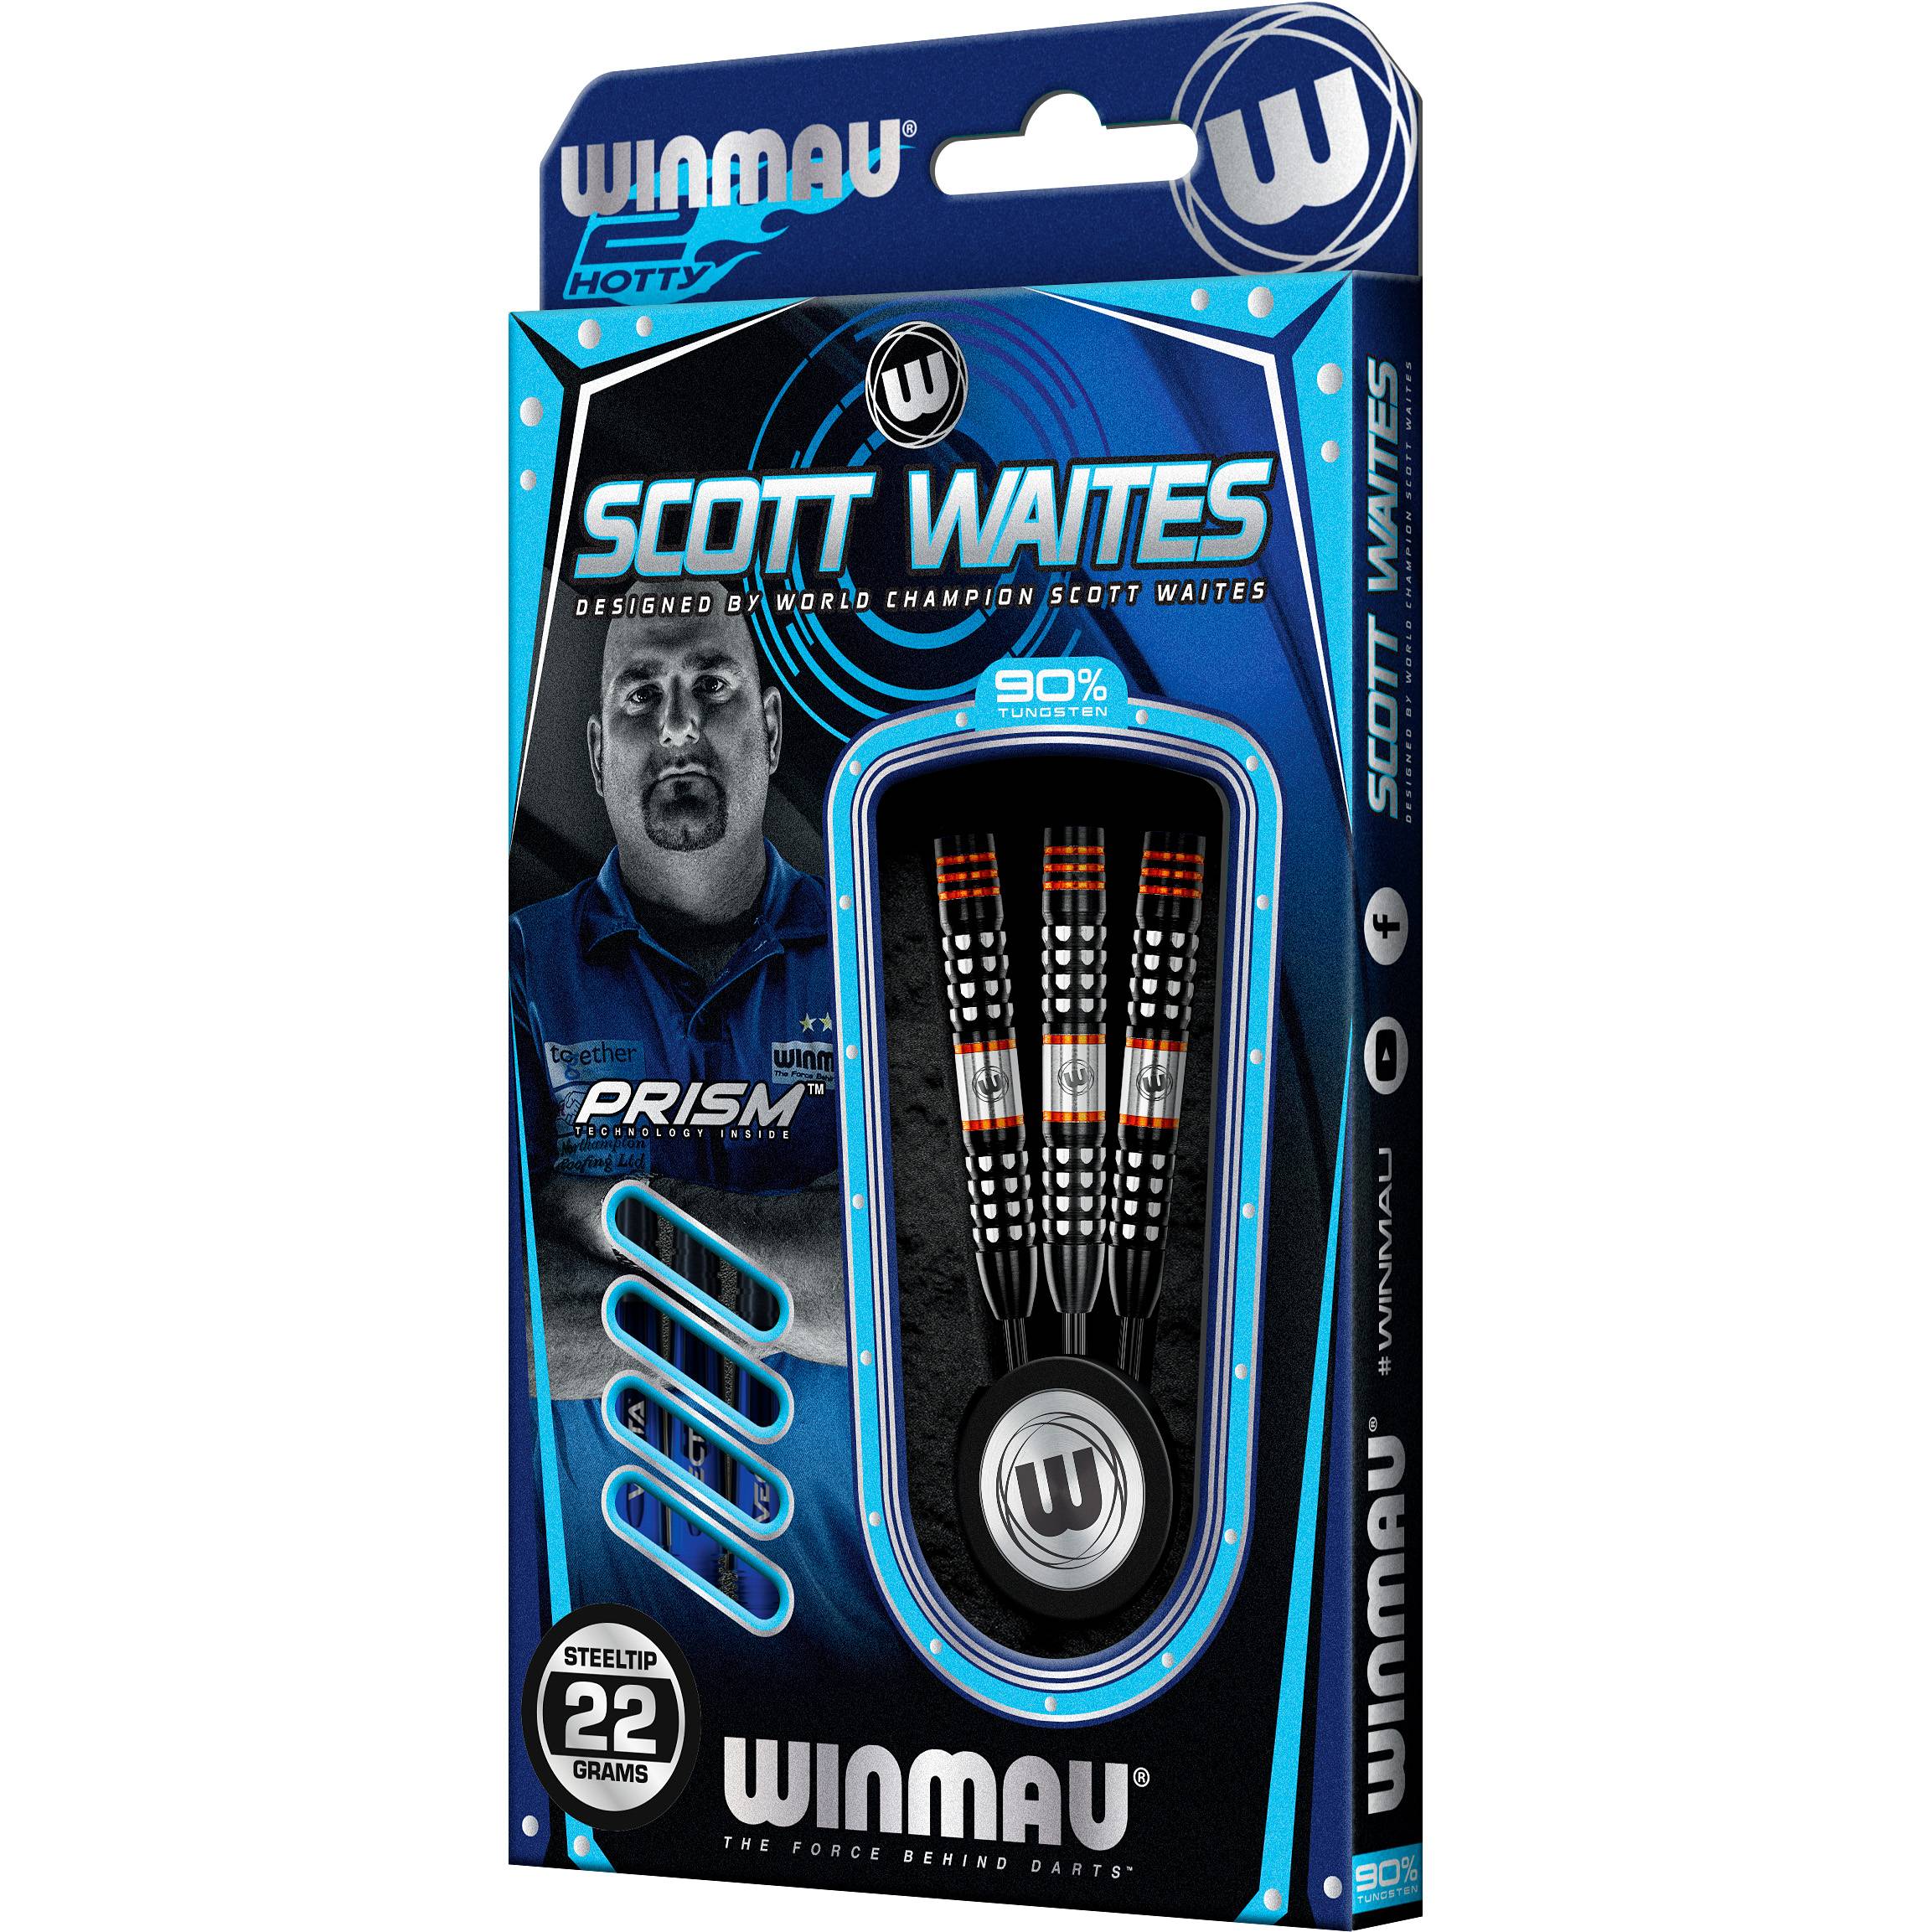 Winmau - Scott Waites - Steeldart